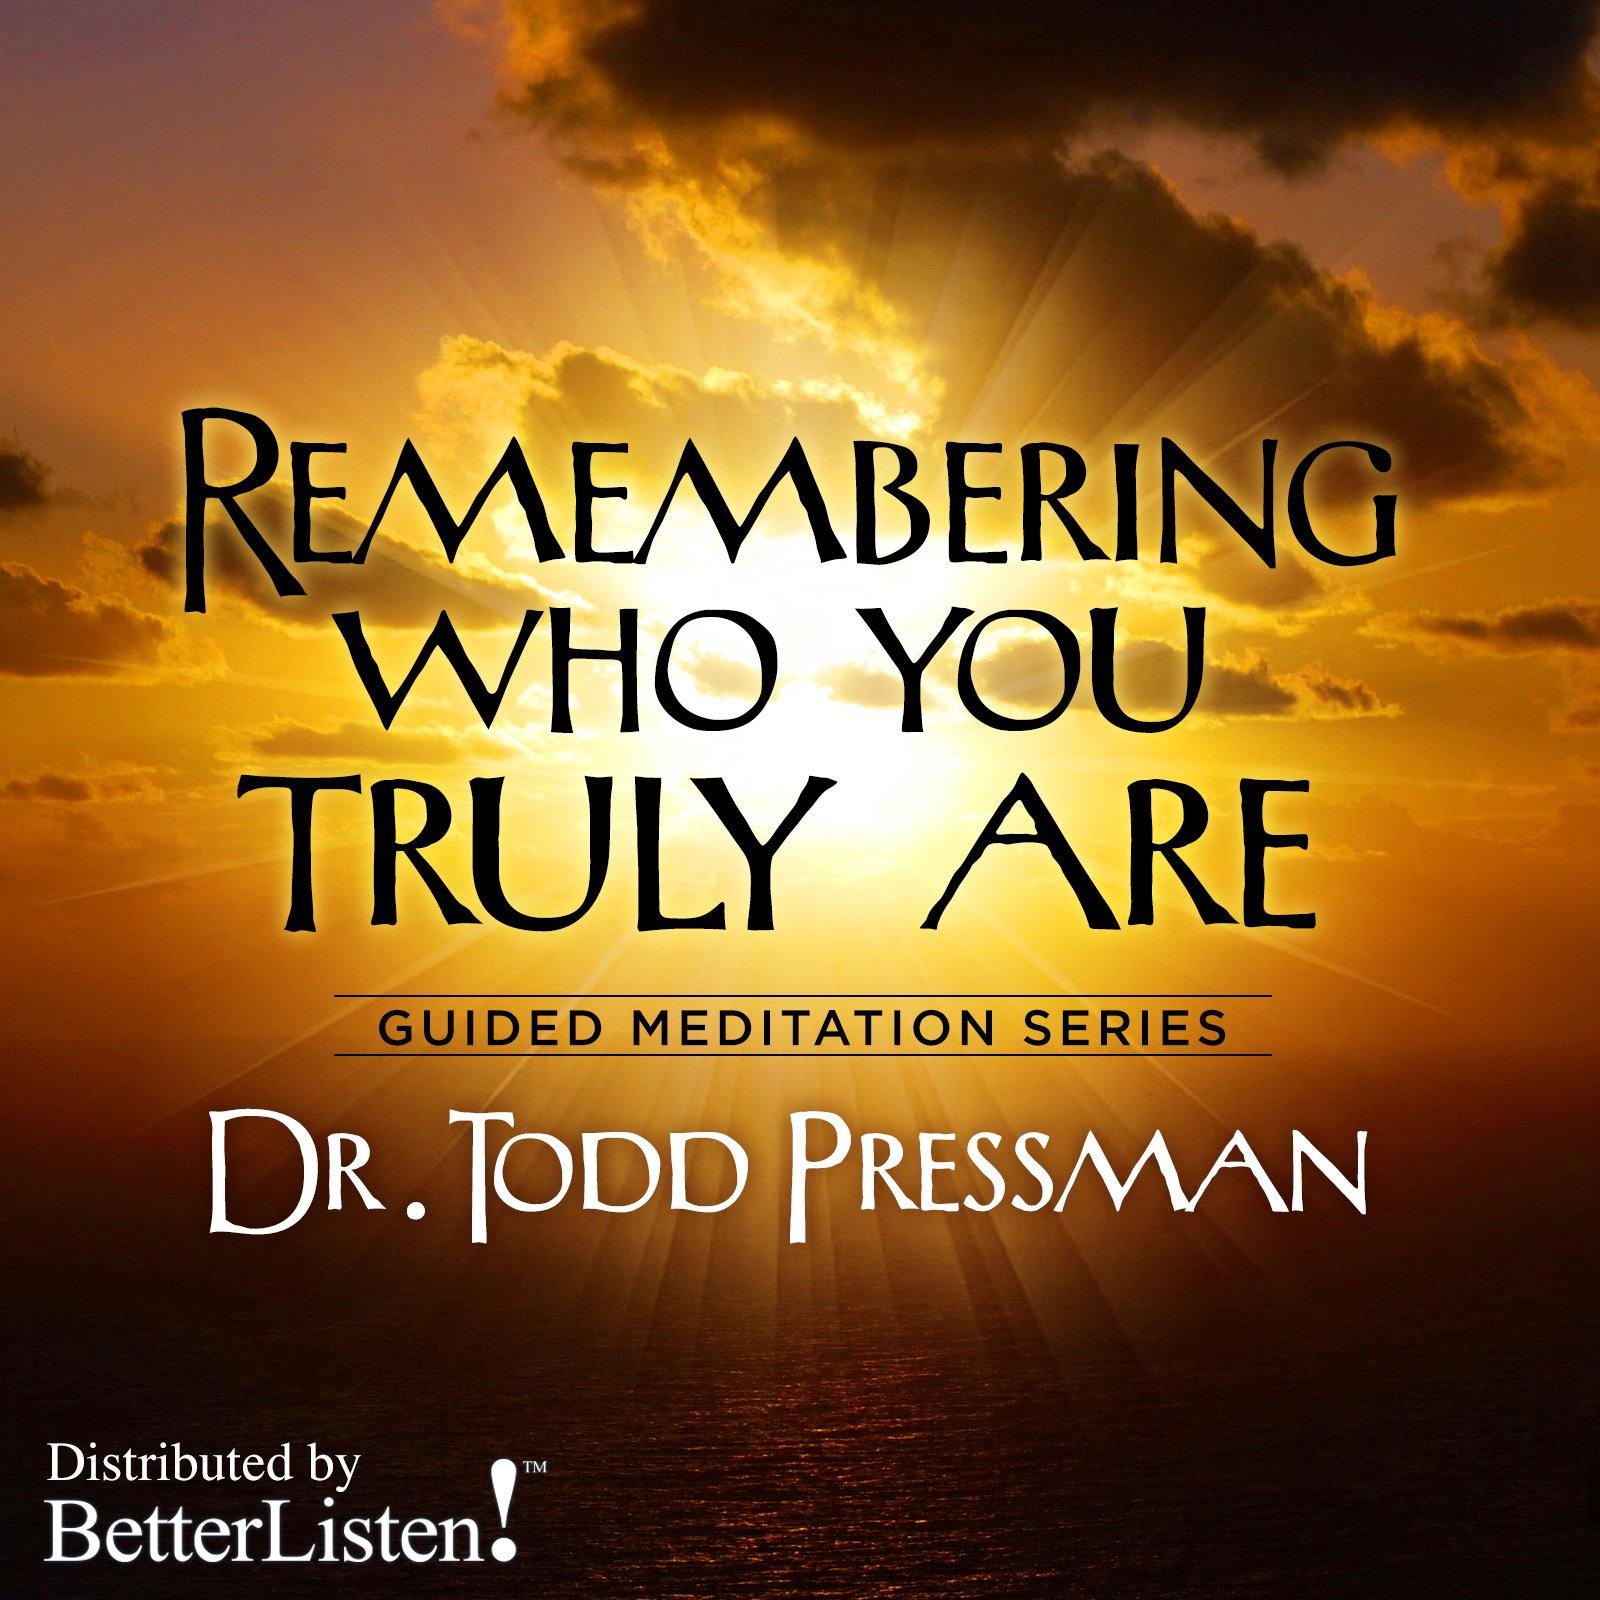 Remembering Who You Truly Are by Dr. Todd Pressman Audio Program BetterListen! - BetterListen!